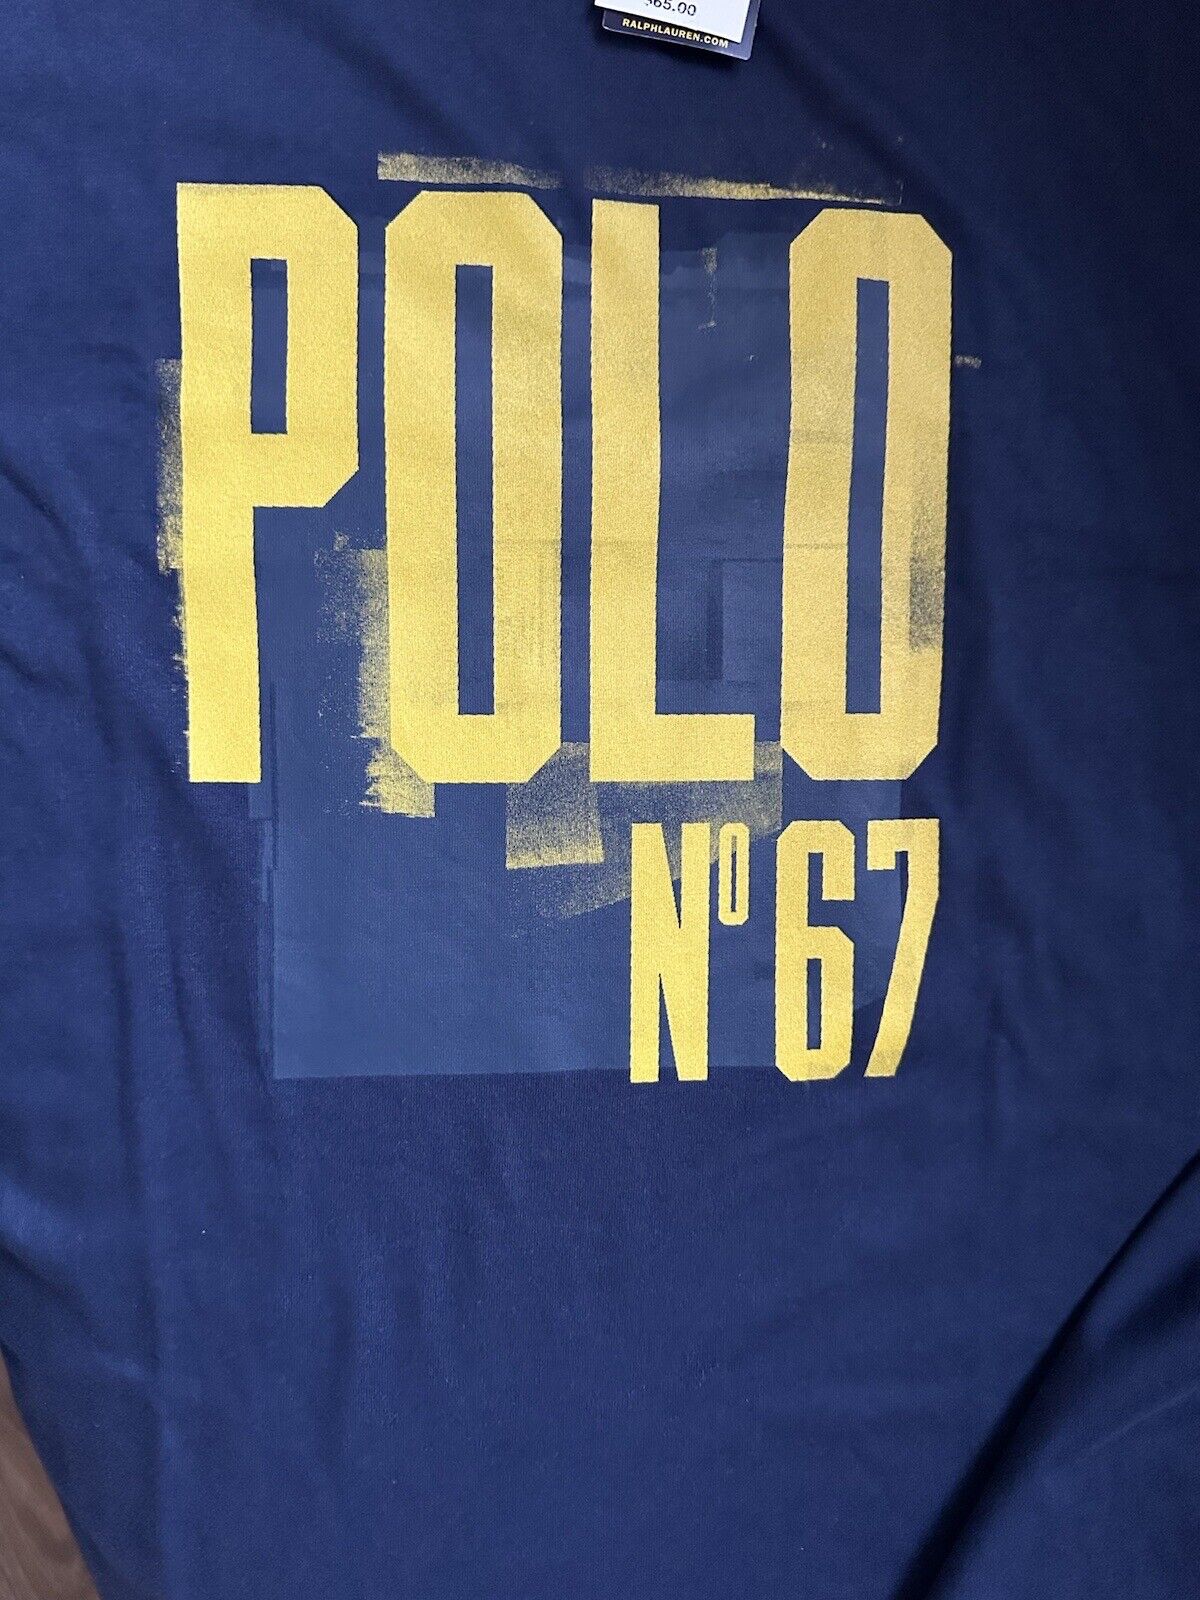 NWT Polo Ralph Lauren POLO 67 Men's Blue Short Sleeve T-Shirt Top Large